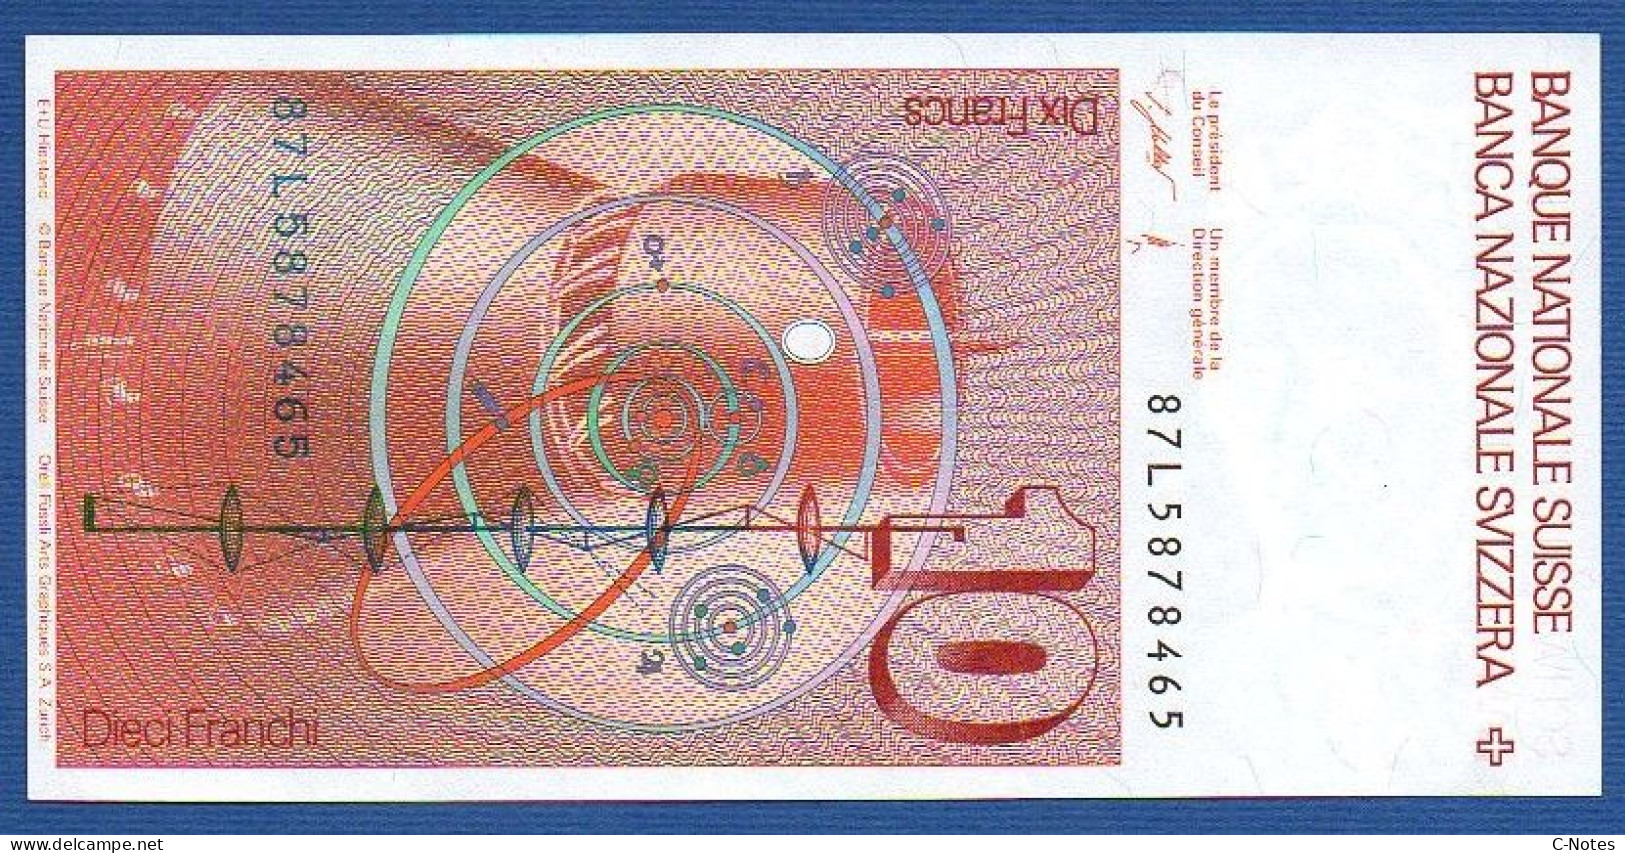 SWITZERLAND - P.53g(3) - 10 Francs 1987 UNC, Serie 87L5878465   -signatures: F. Schaller & Meyer - Suiza